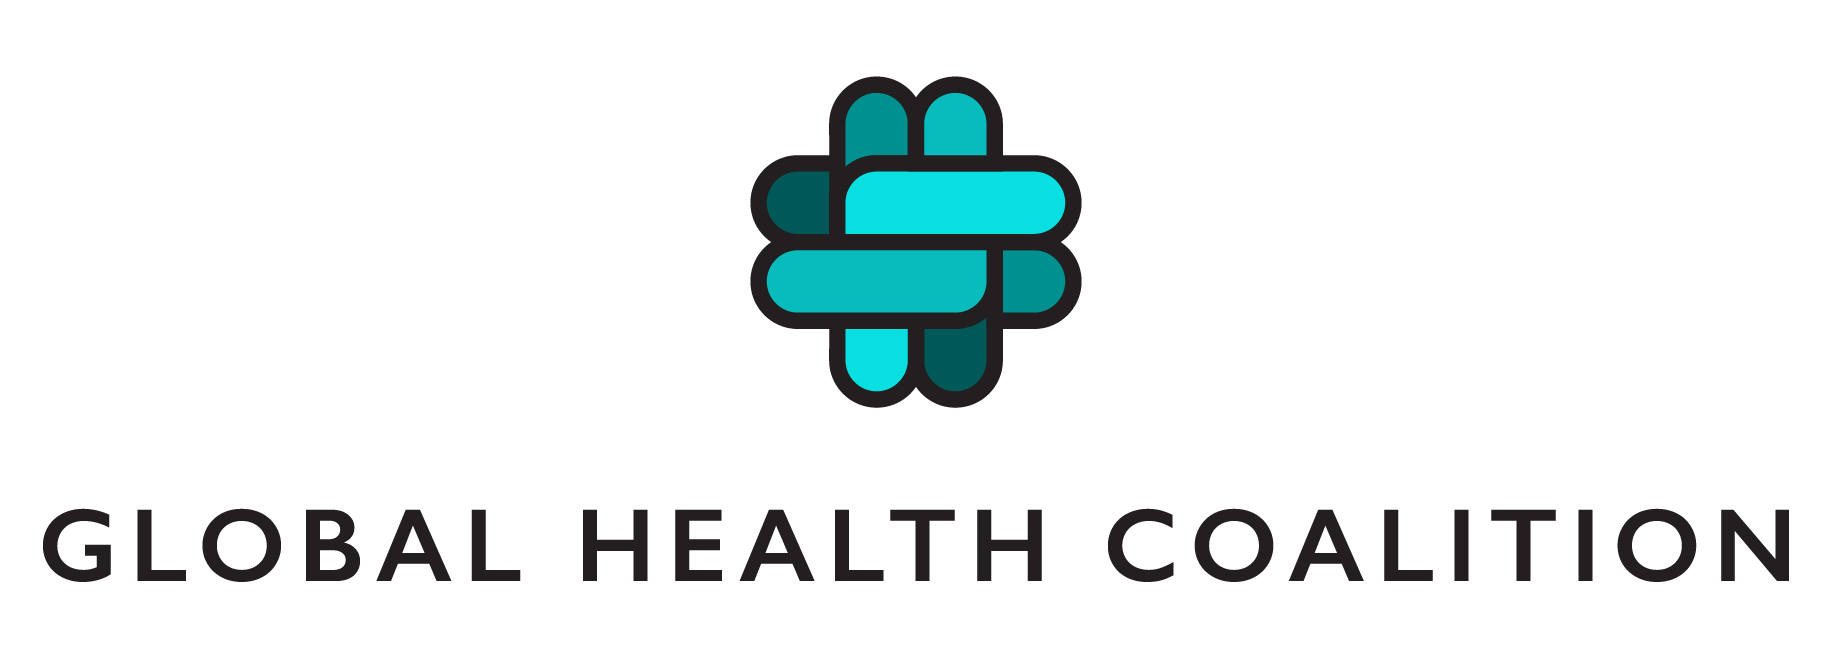 Global Health Coalition logo